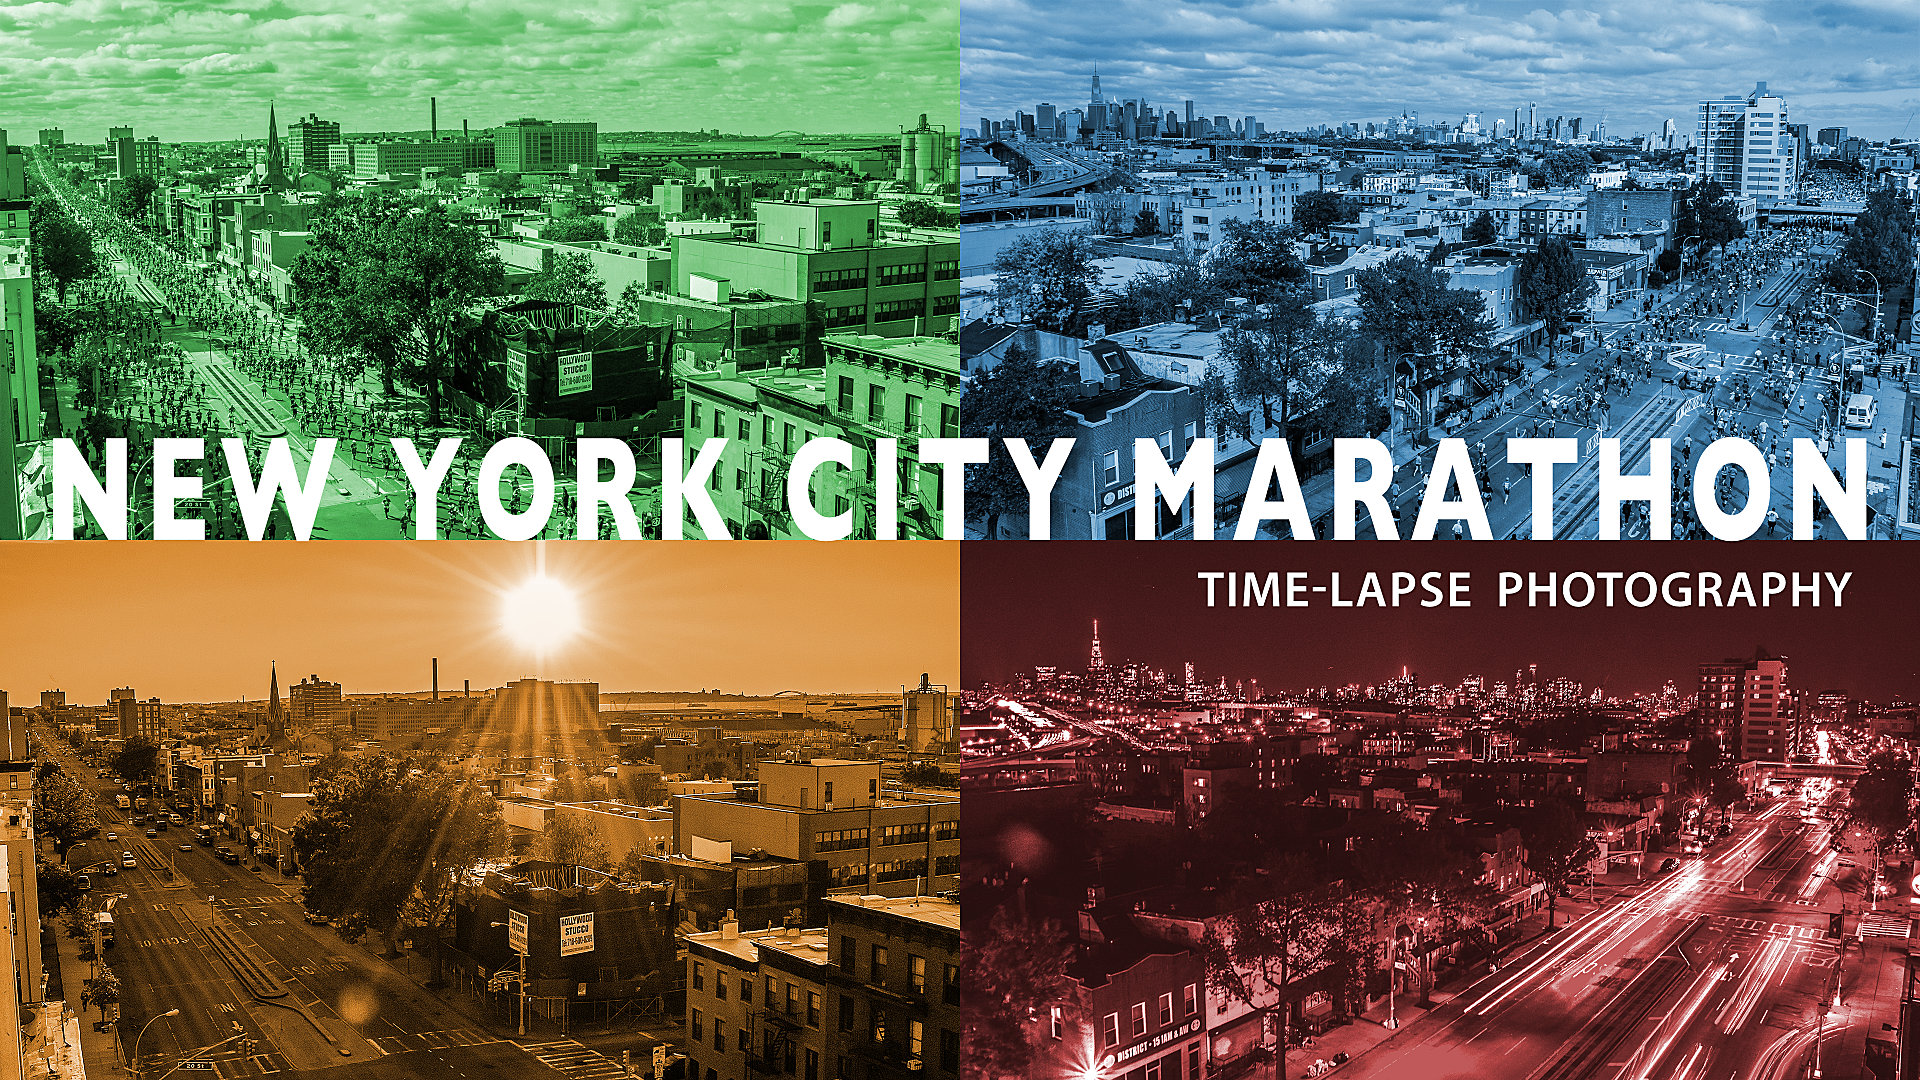 NYC Marathon 2014 time-lapse video